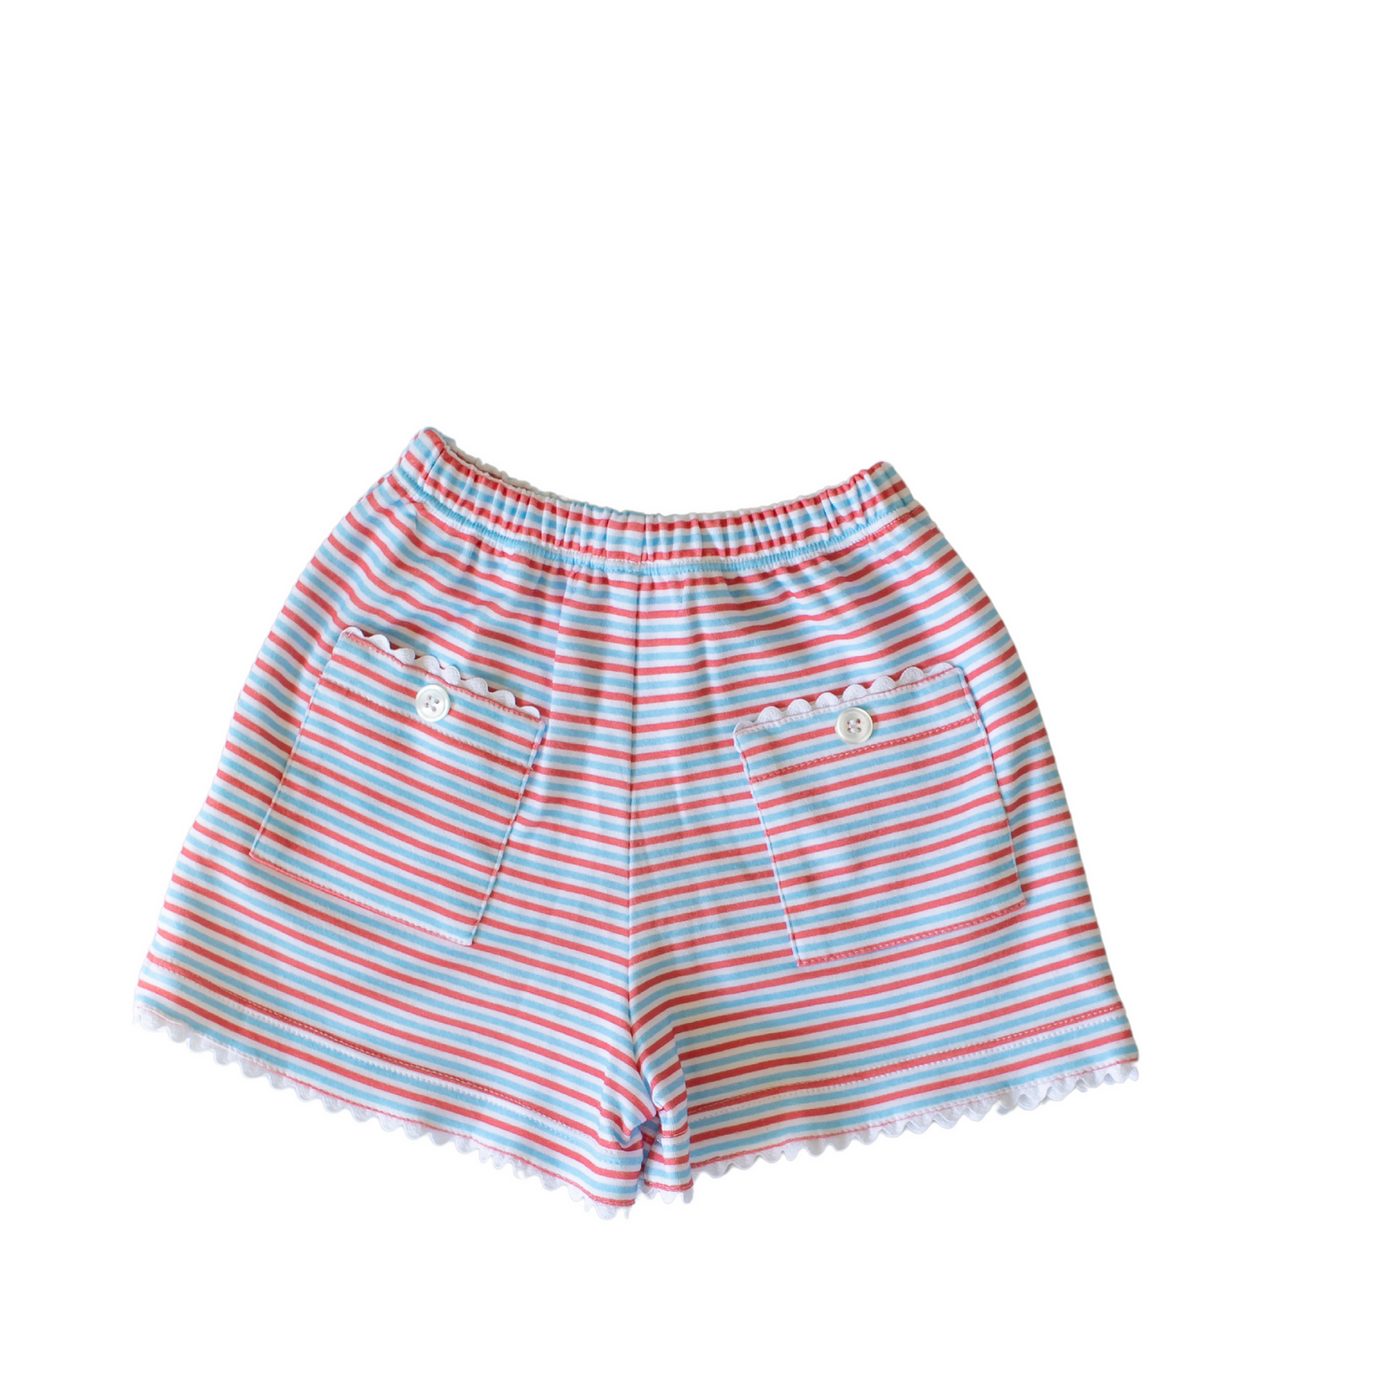 Knit Stripe Shorts - Watermelon / Blue